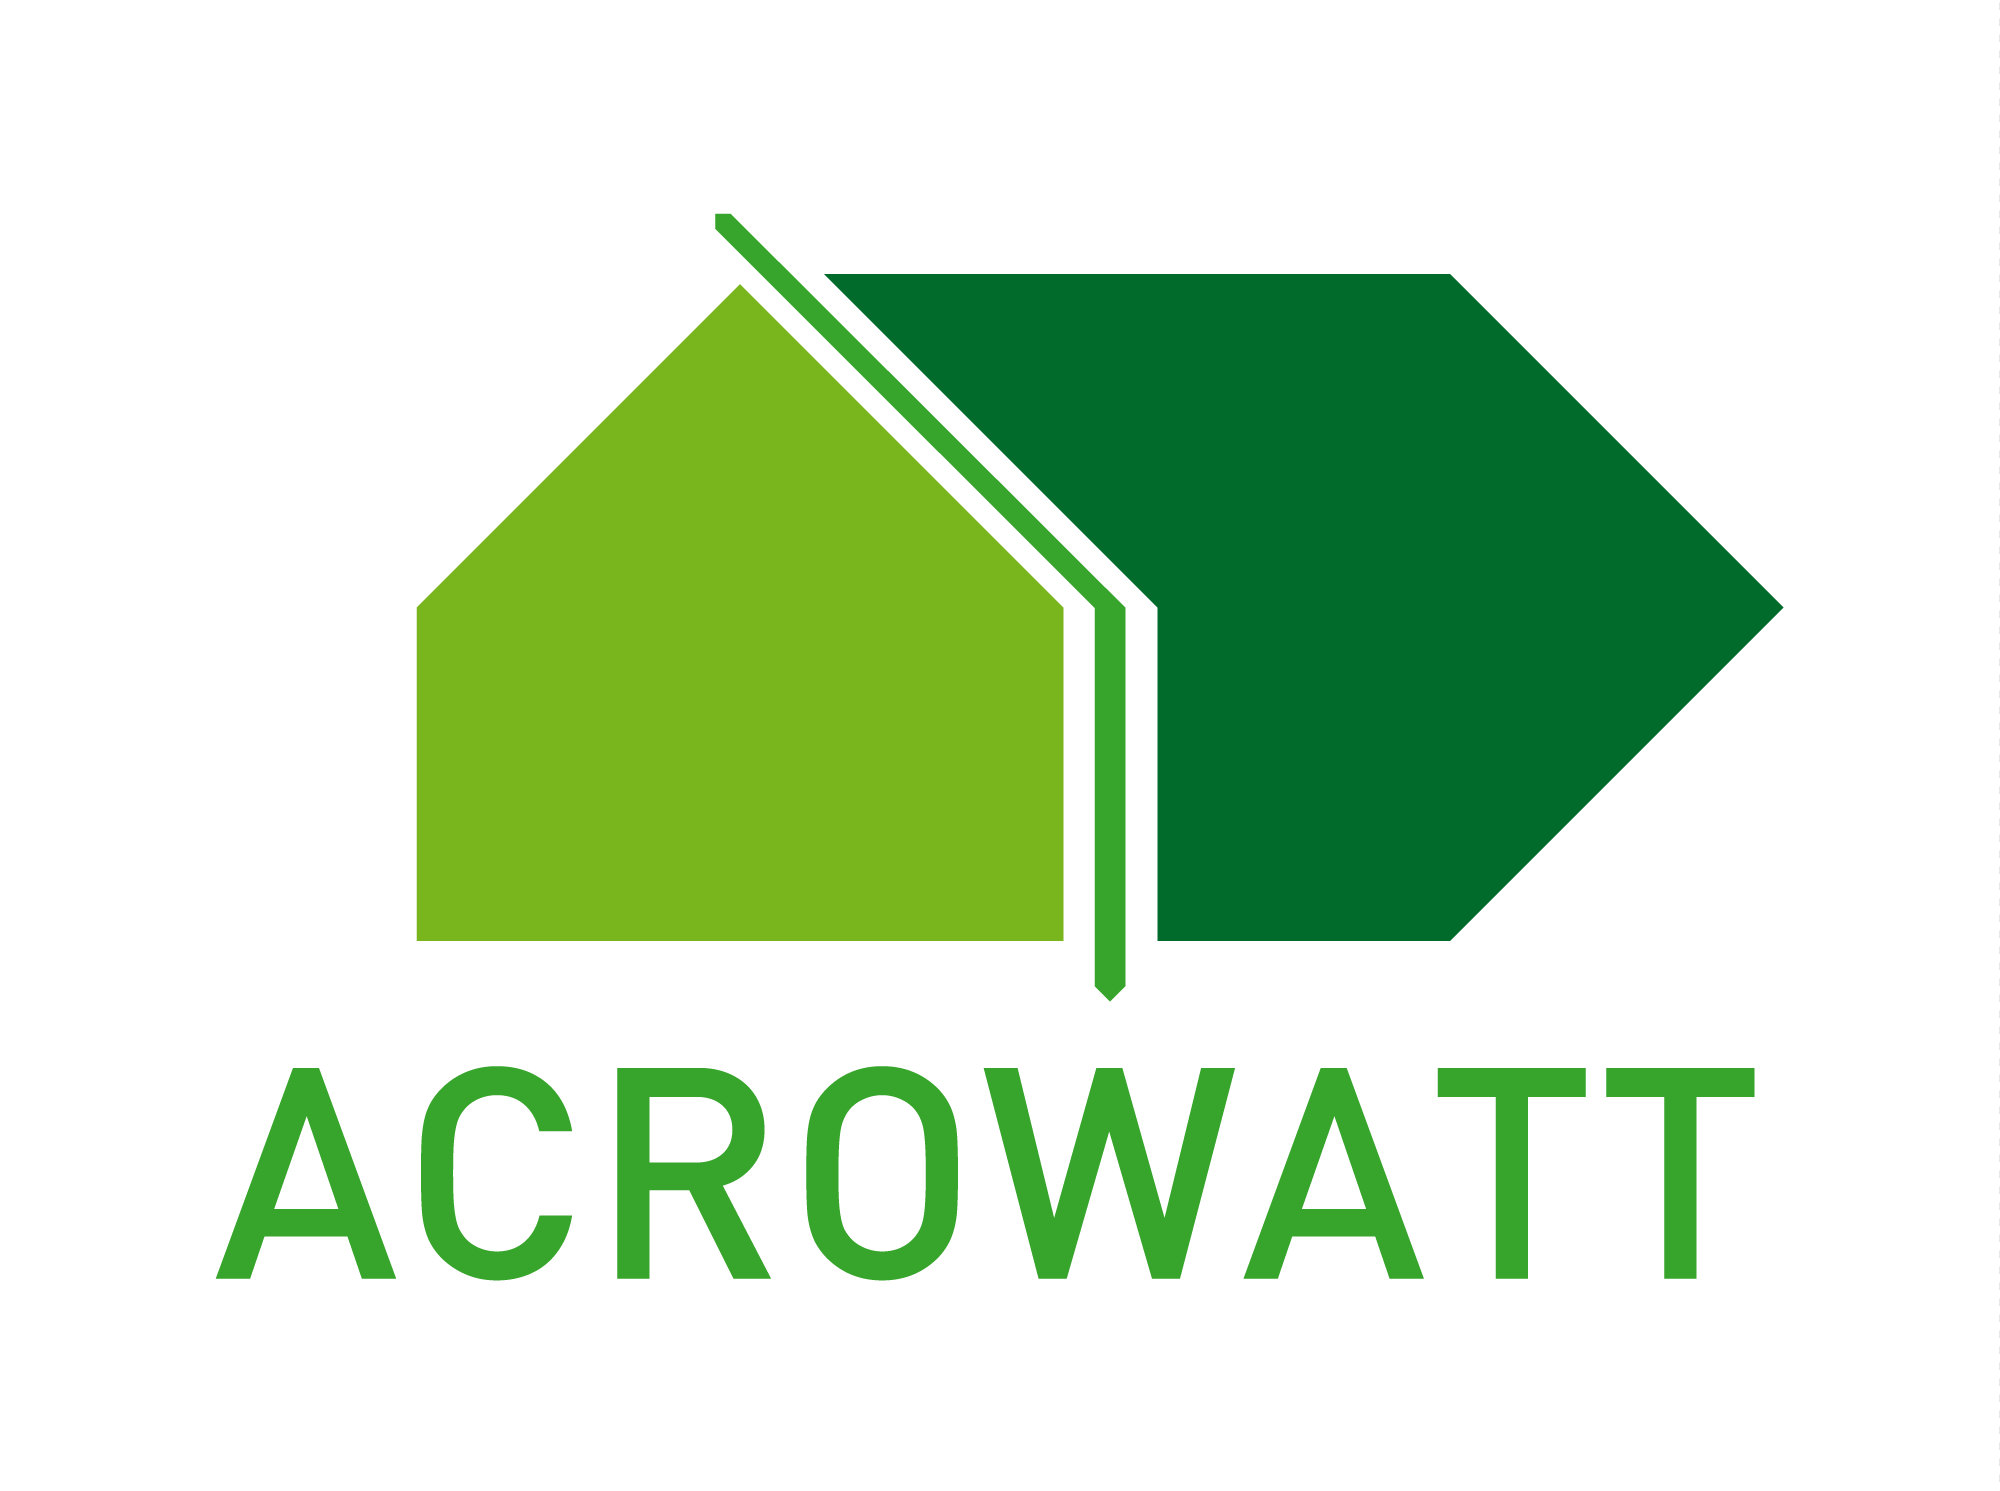 ACROWATT Logo RVB